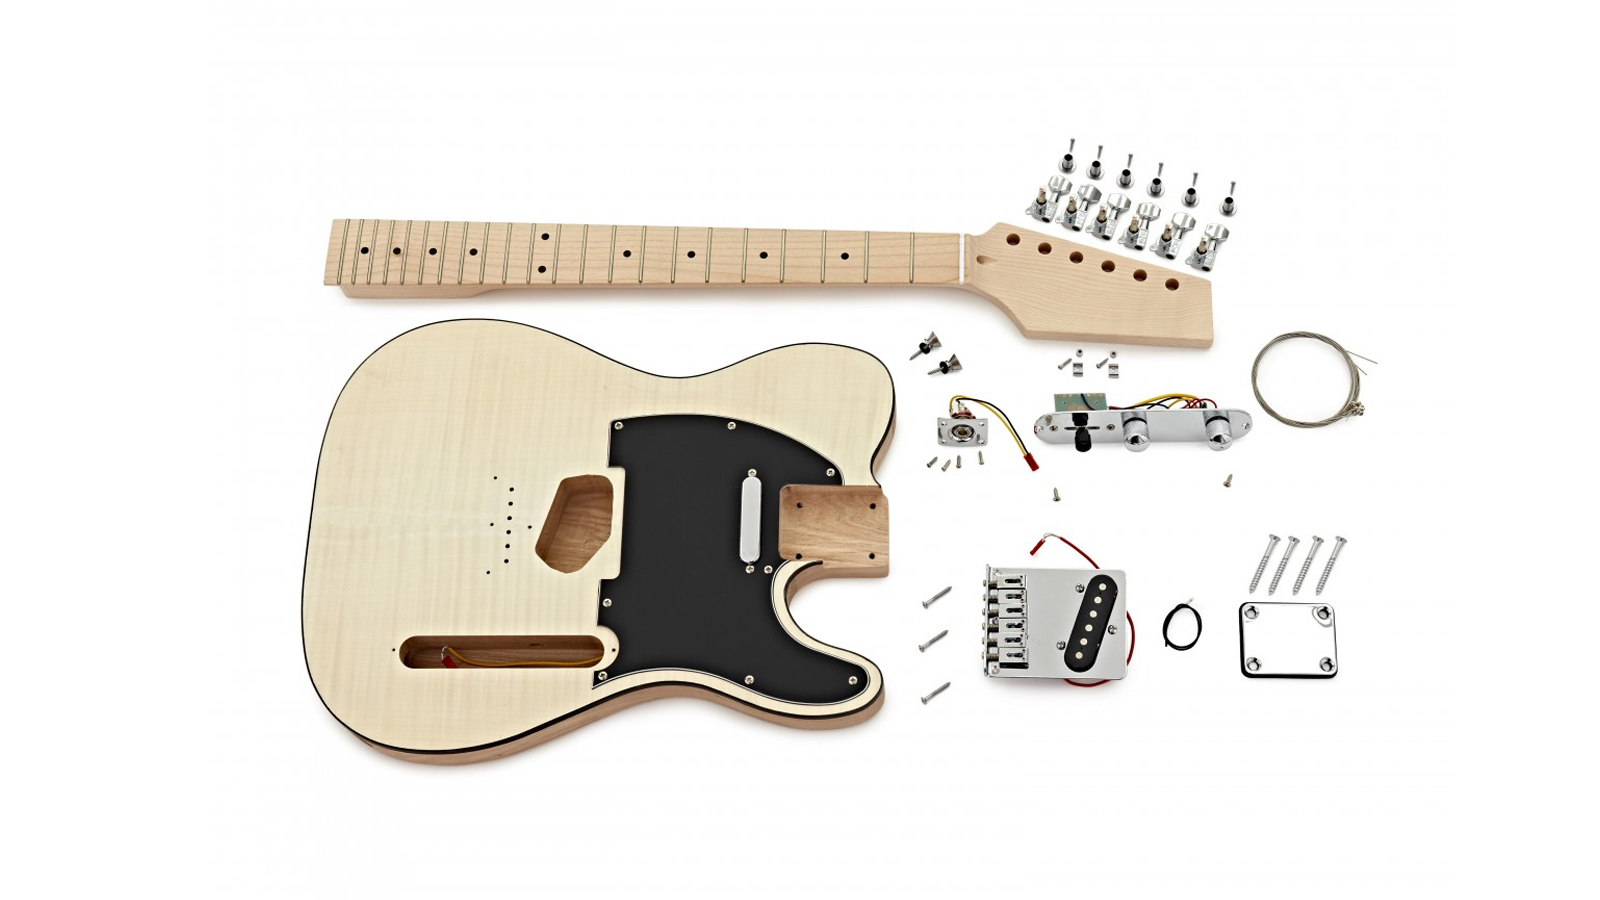 Best DIY guitar kits: Guitarworks Solo Cutaway